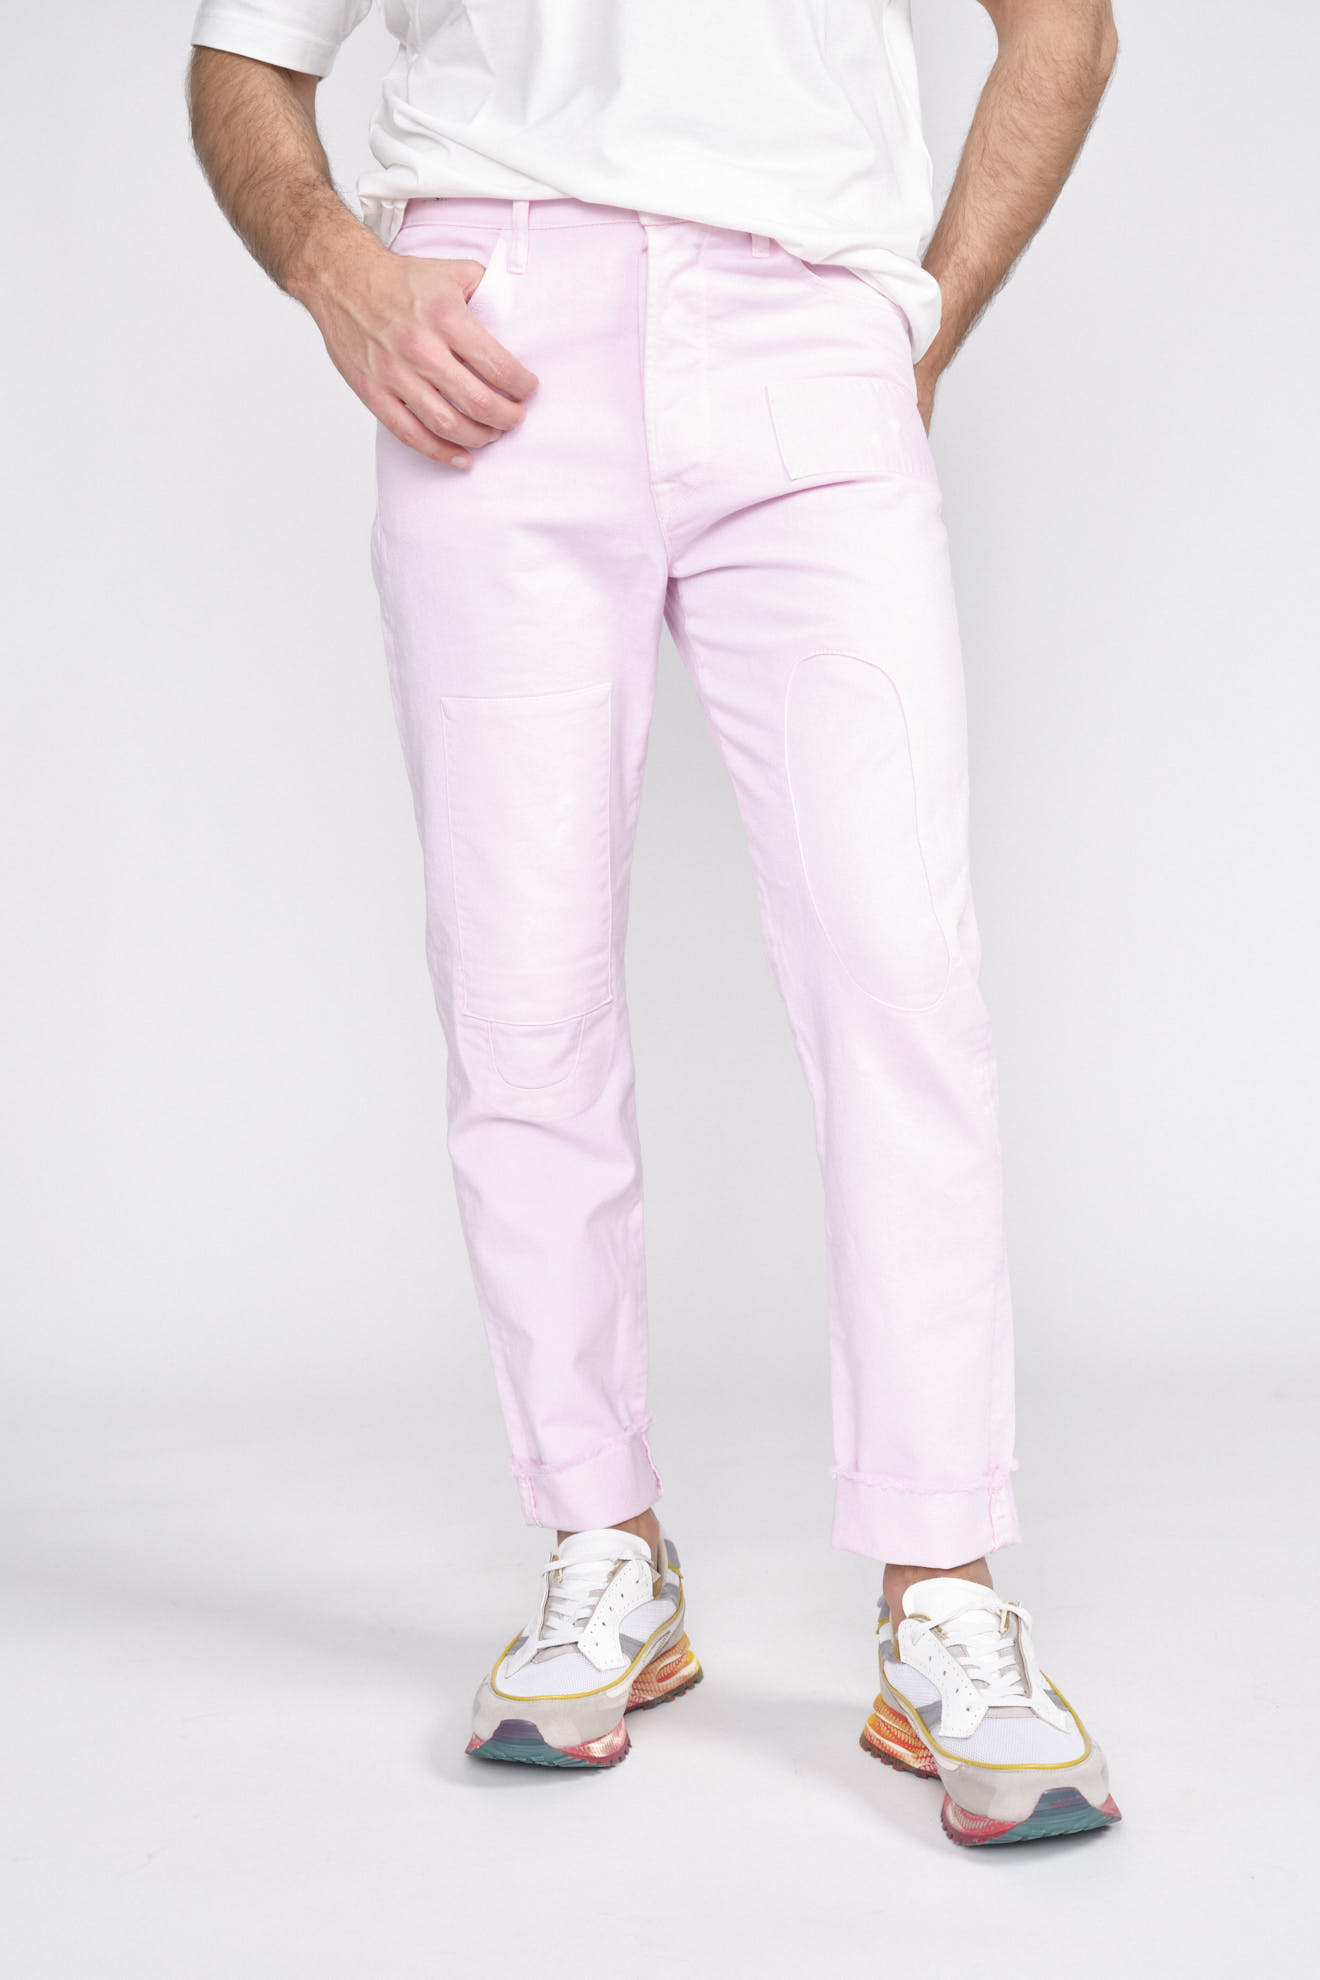 maurizio massimino Jose - Pantalon en jean avec patchs en denim rose 52